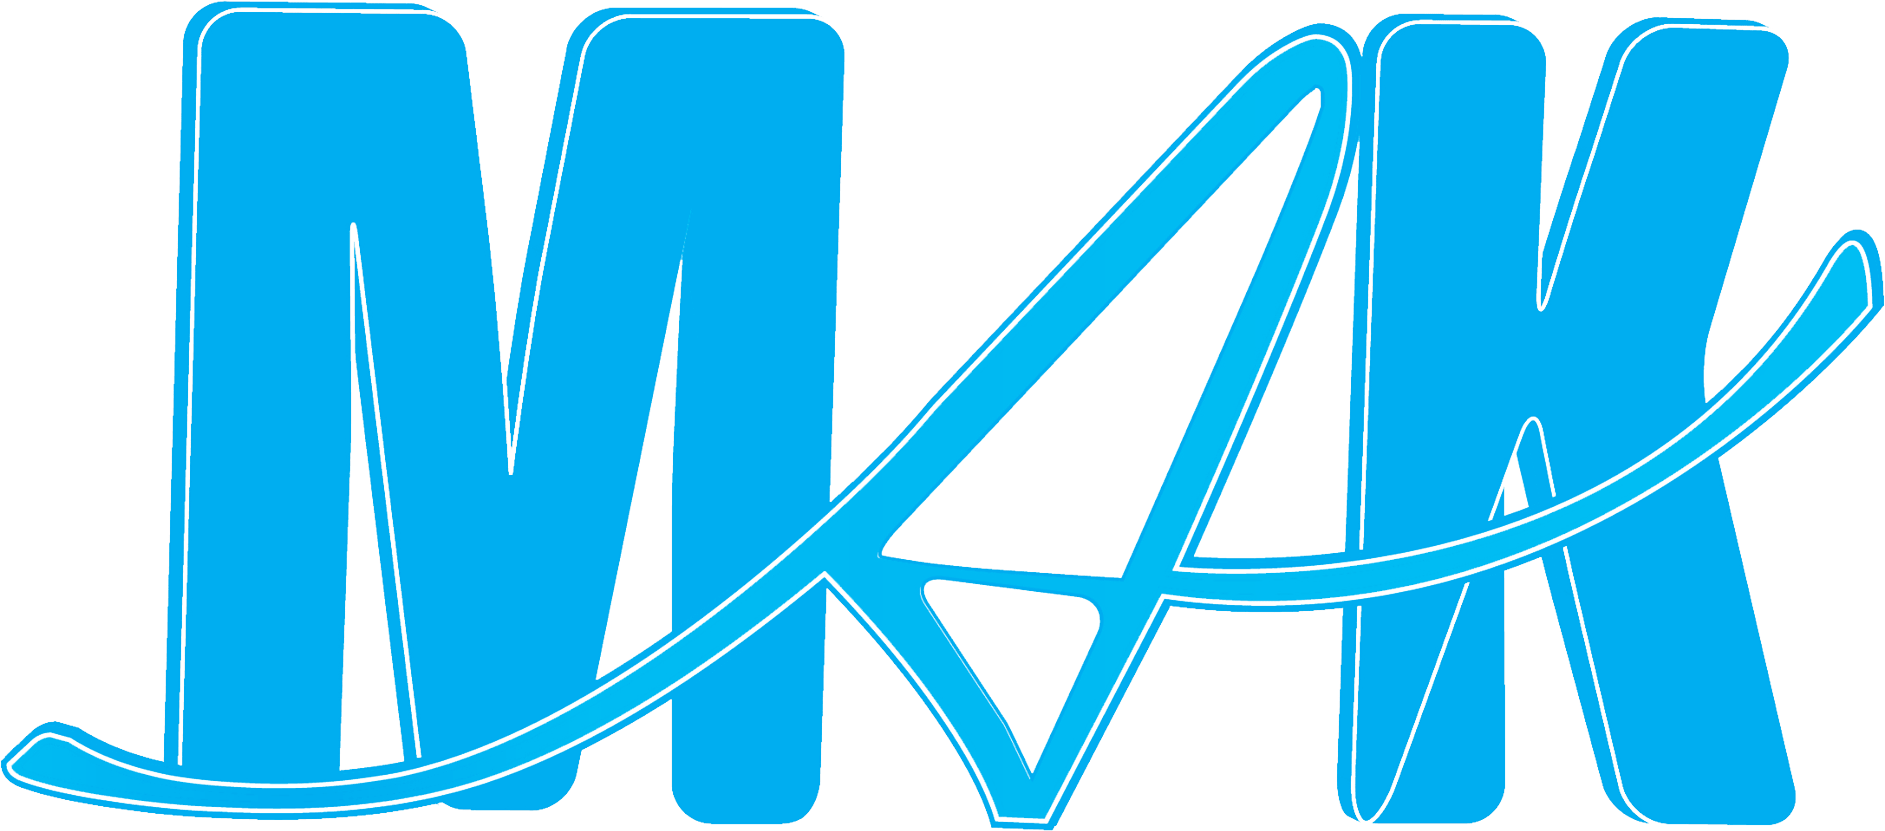 MAK logo